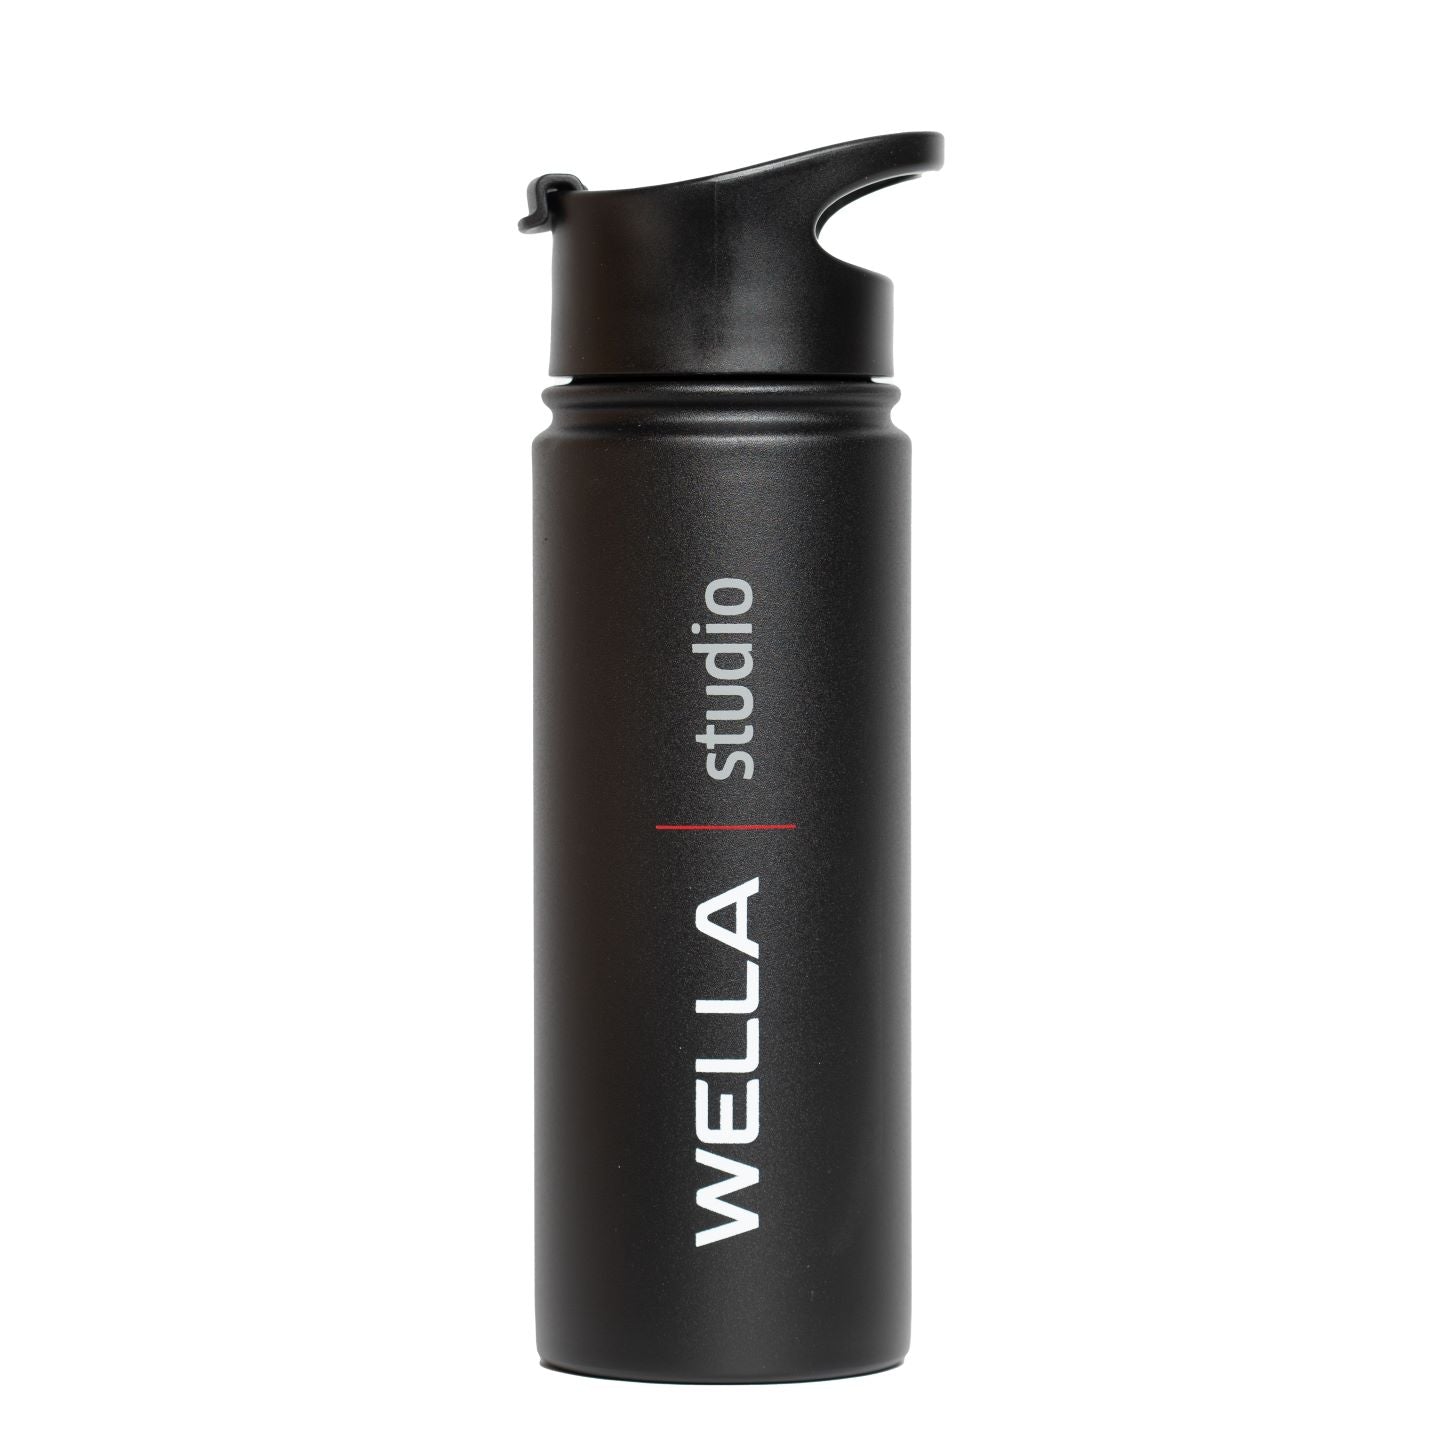 Wella Studio Insulated Water Bottle